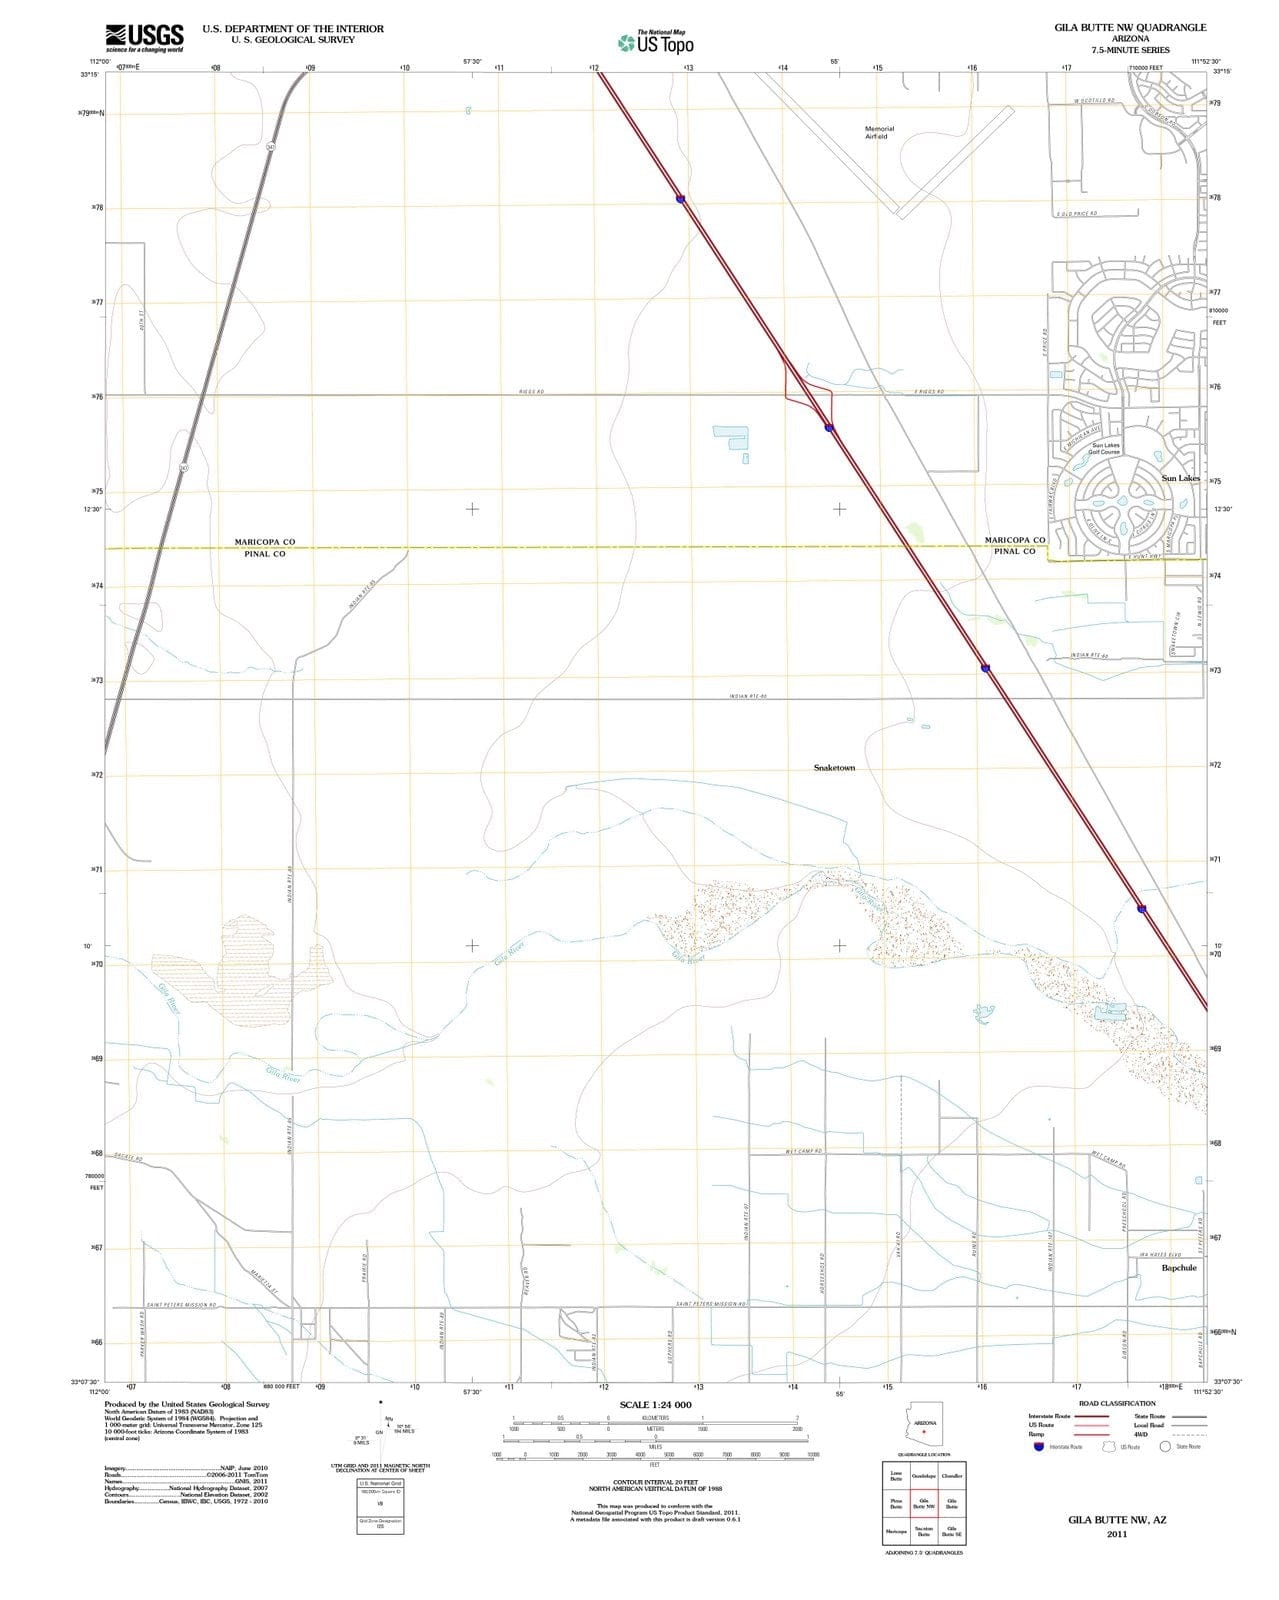 2011 Gila Butte, AZ - Arizona - USGS Topographic Map v3